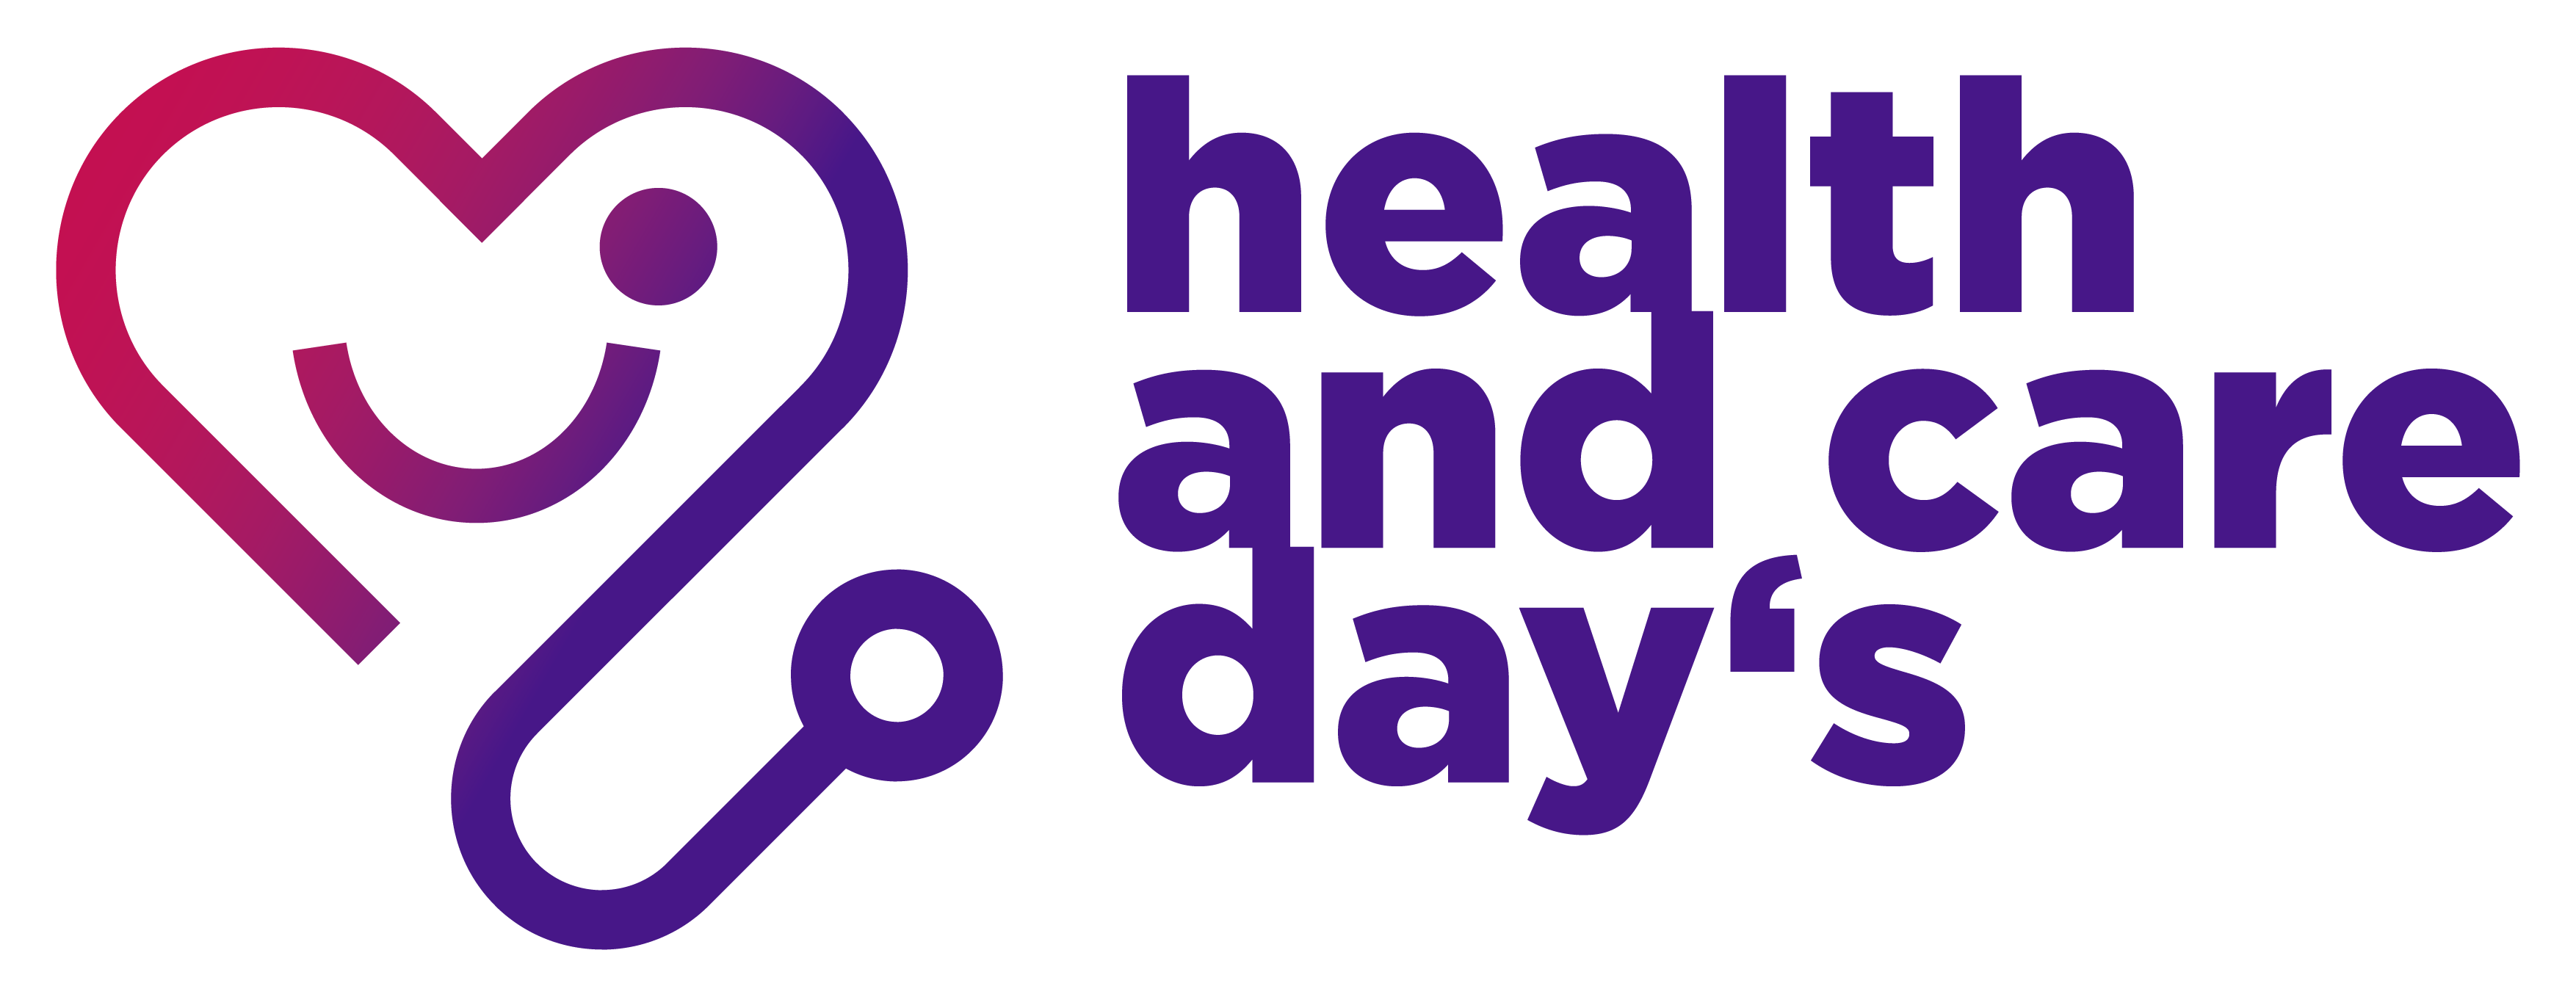 HEALTH & CARE DAYS